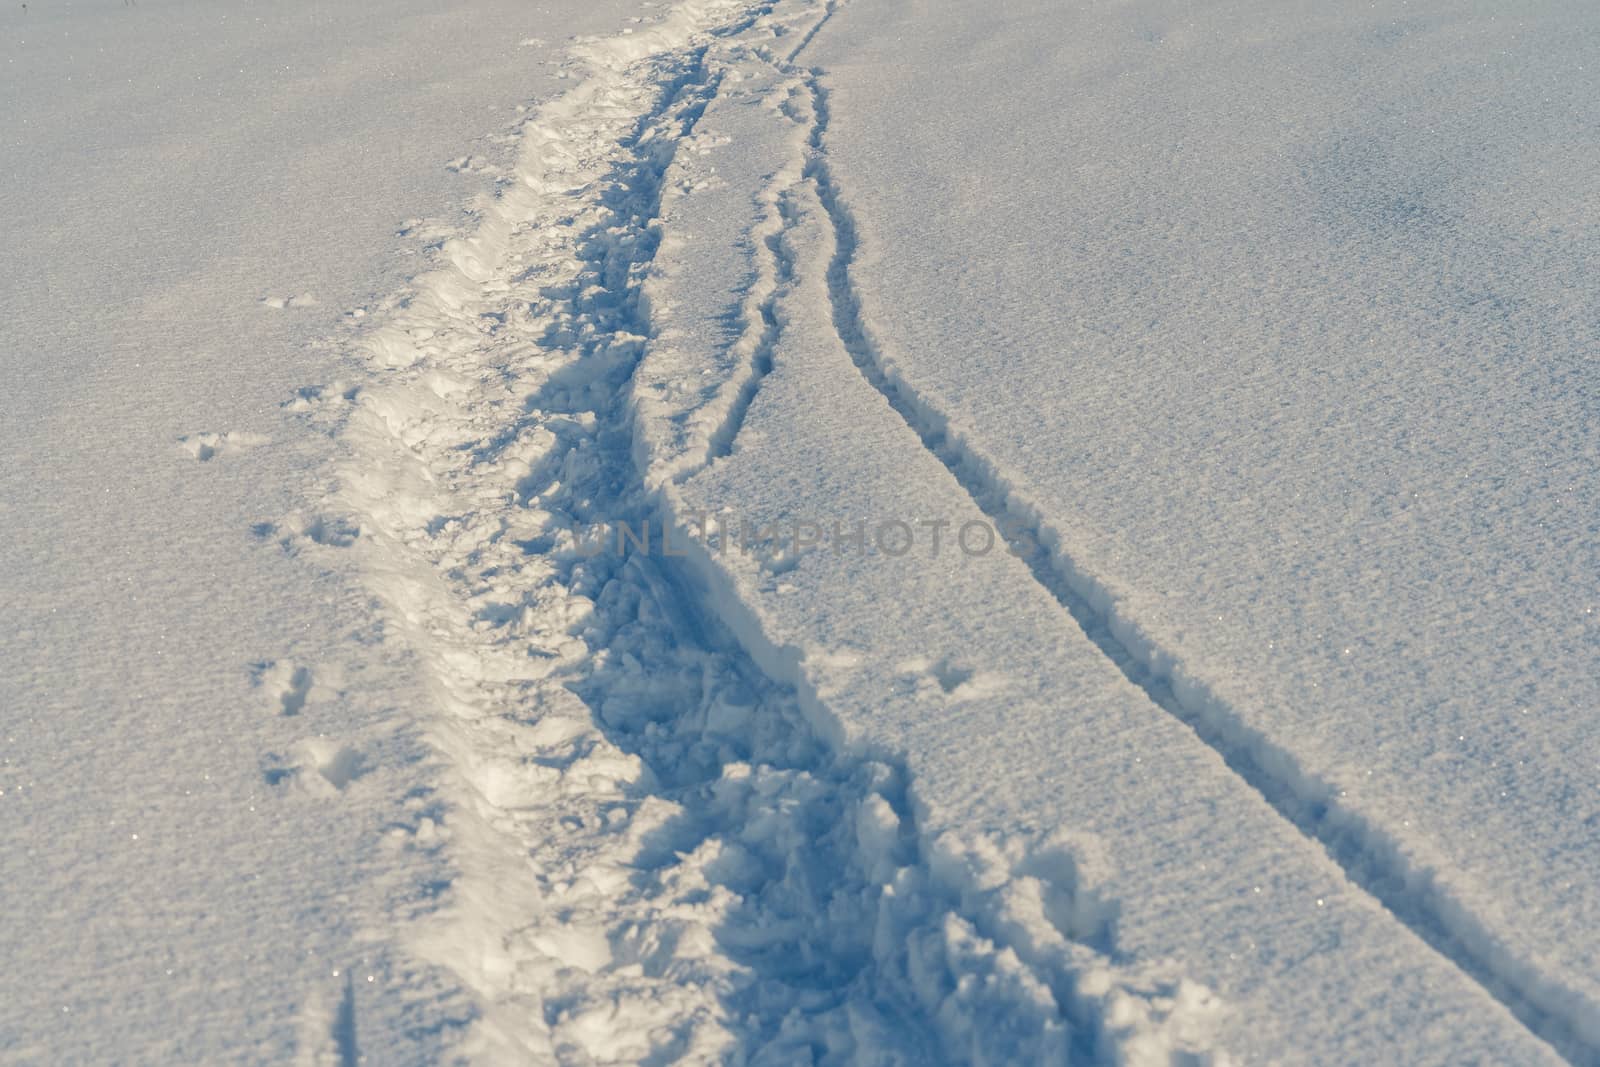 Path in a snowy field, rural landscape by VADIM